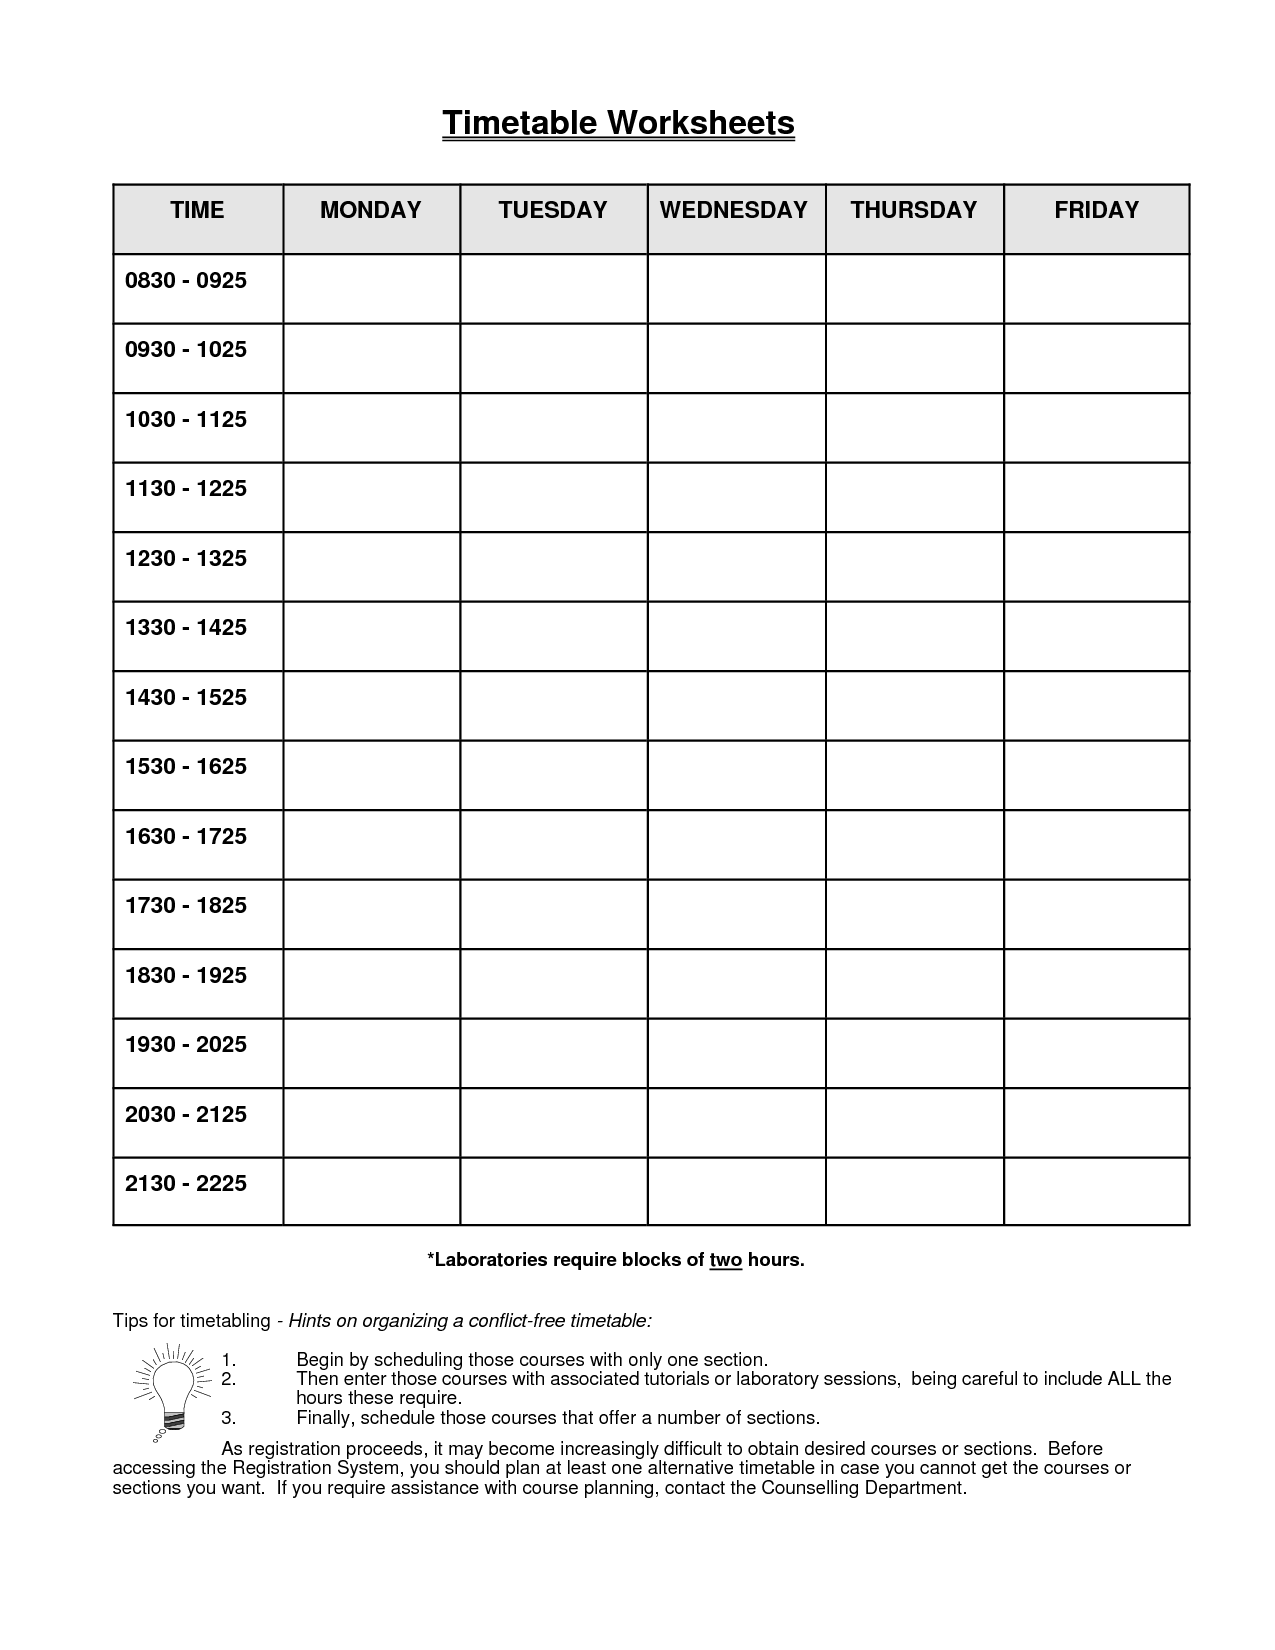 11-best-images-of-printable-timetable-worksheets-printable